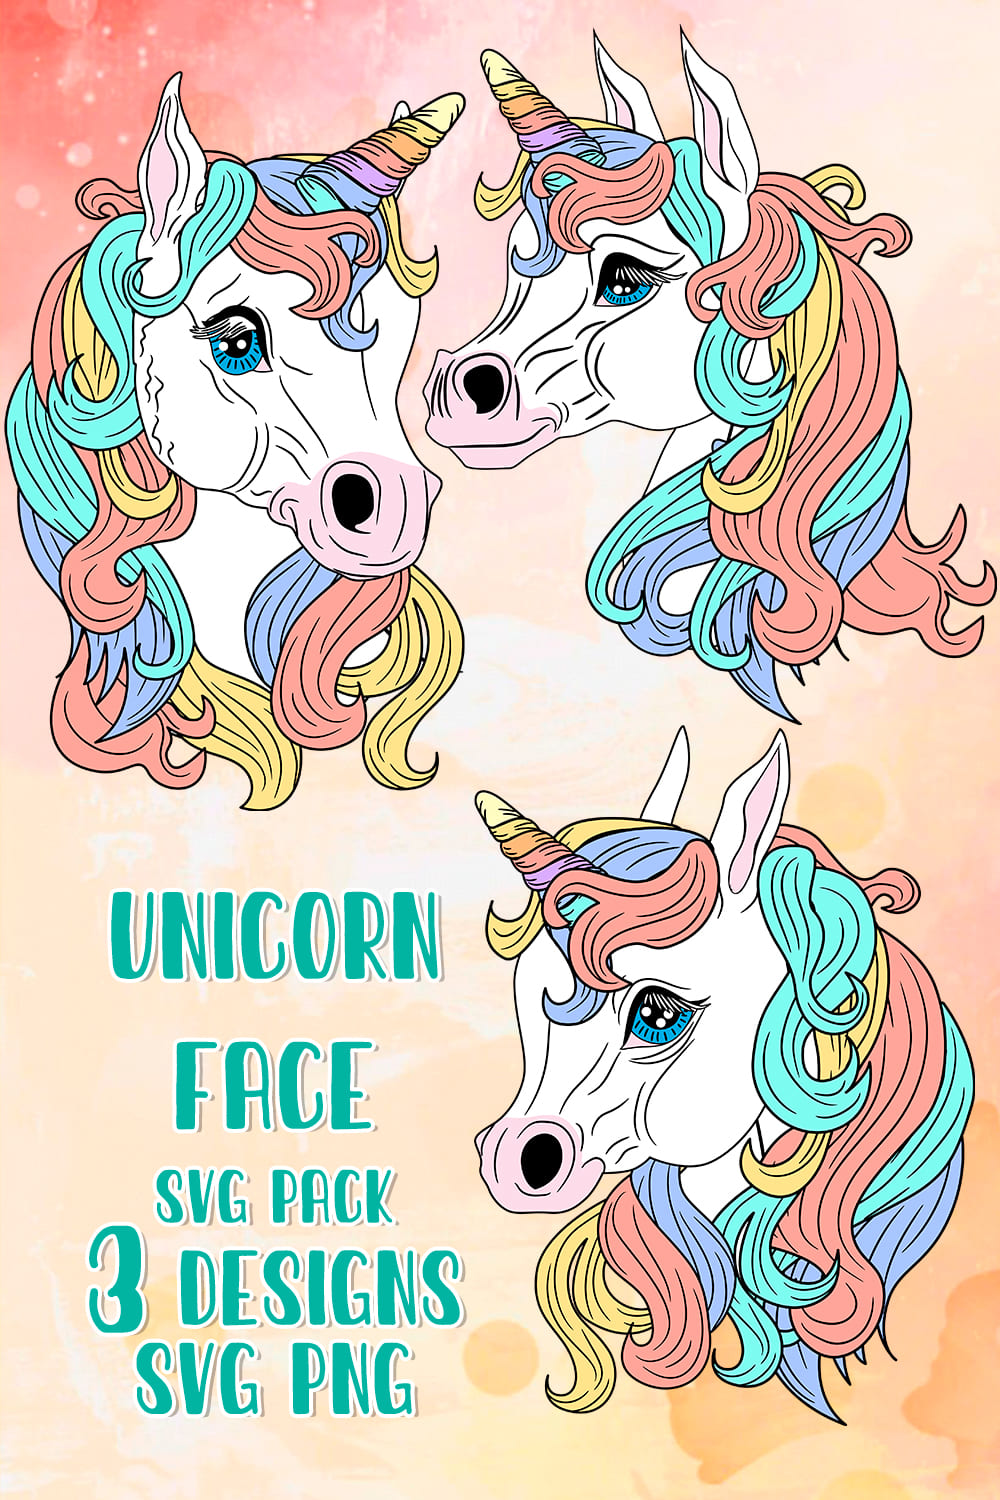 Unicorn Face SVG - pinterest image preview.